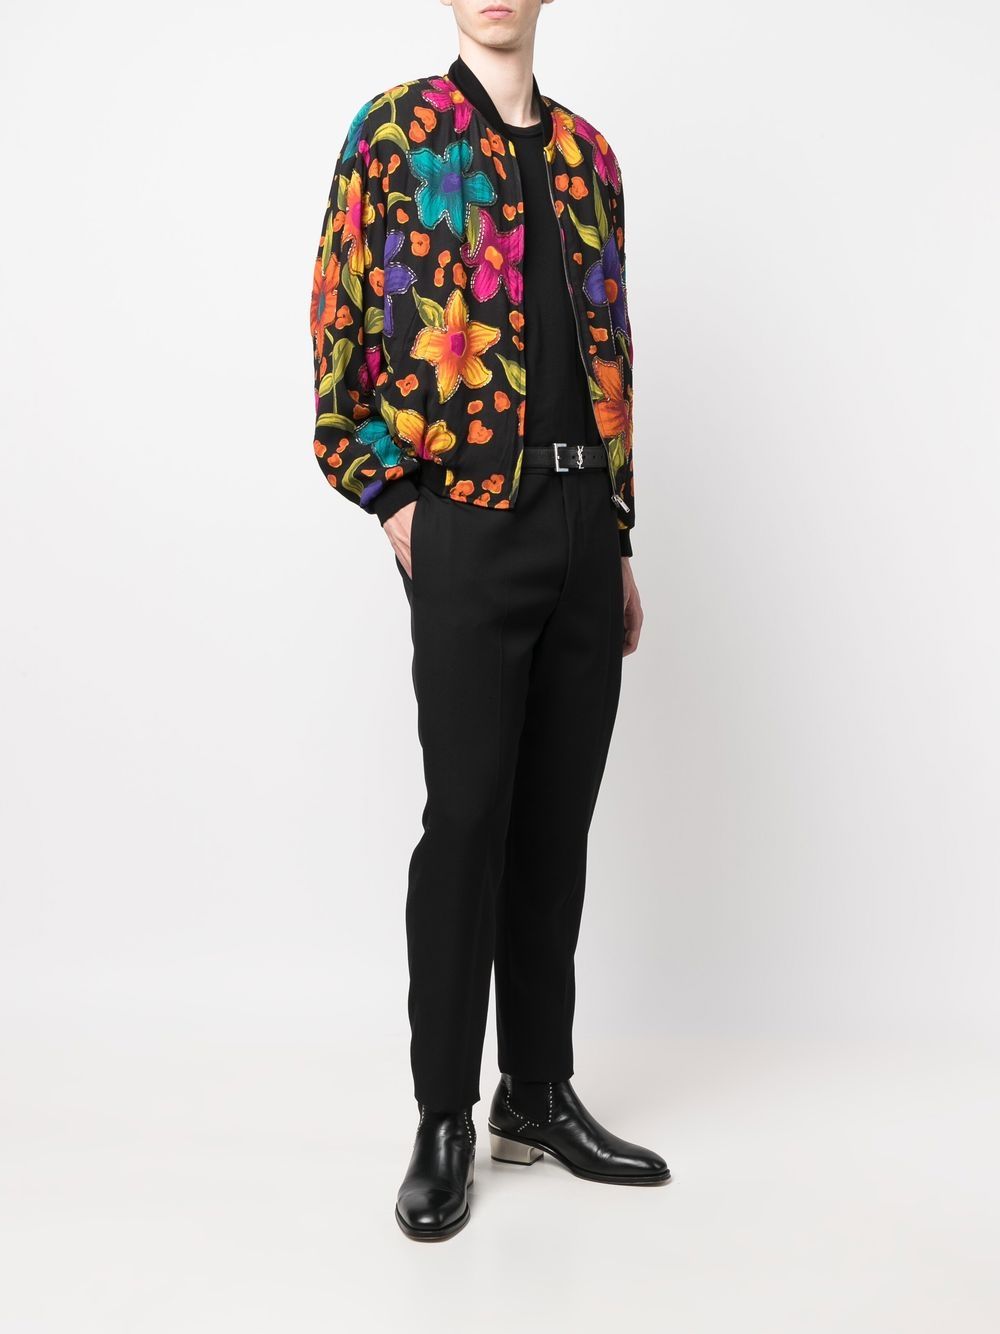 Saint Laurent - Floral-Print Bomber Jacket - Men - Viscose/Acetate/Cupro/Polyamide/Spandex/Elastane/Cotton - 44 - Black